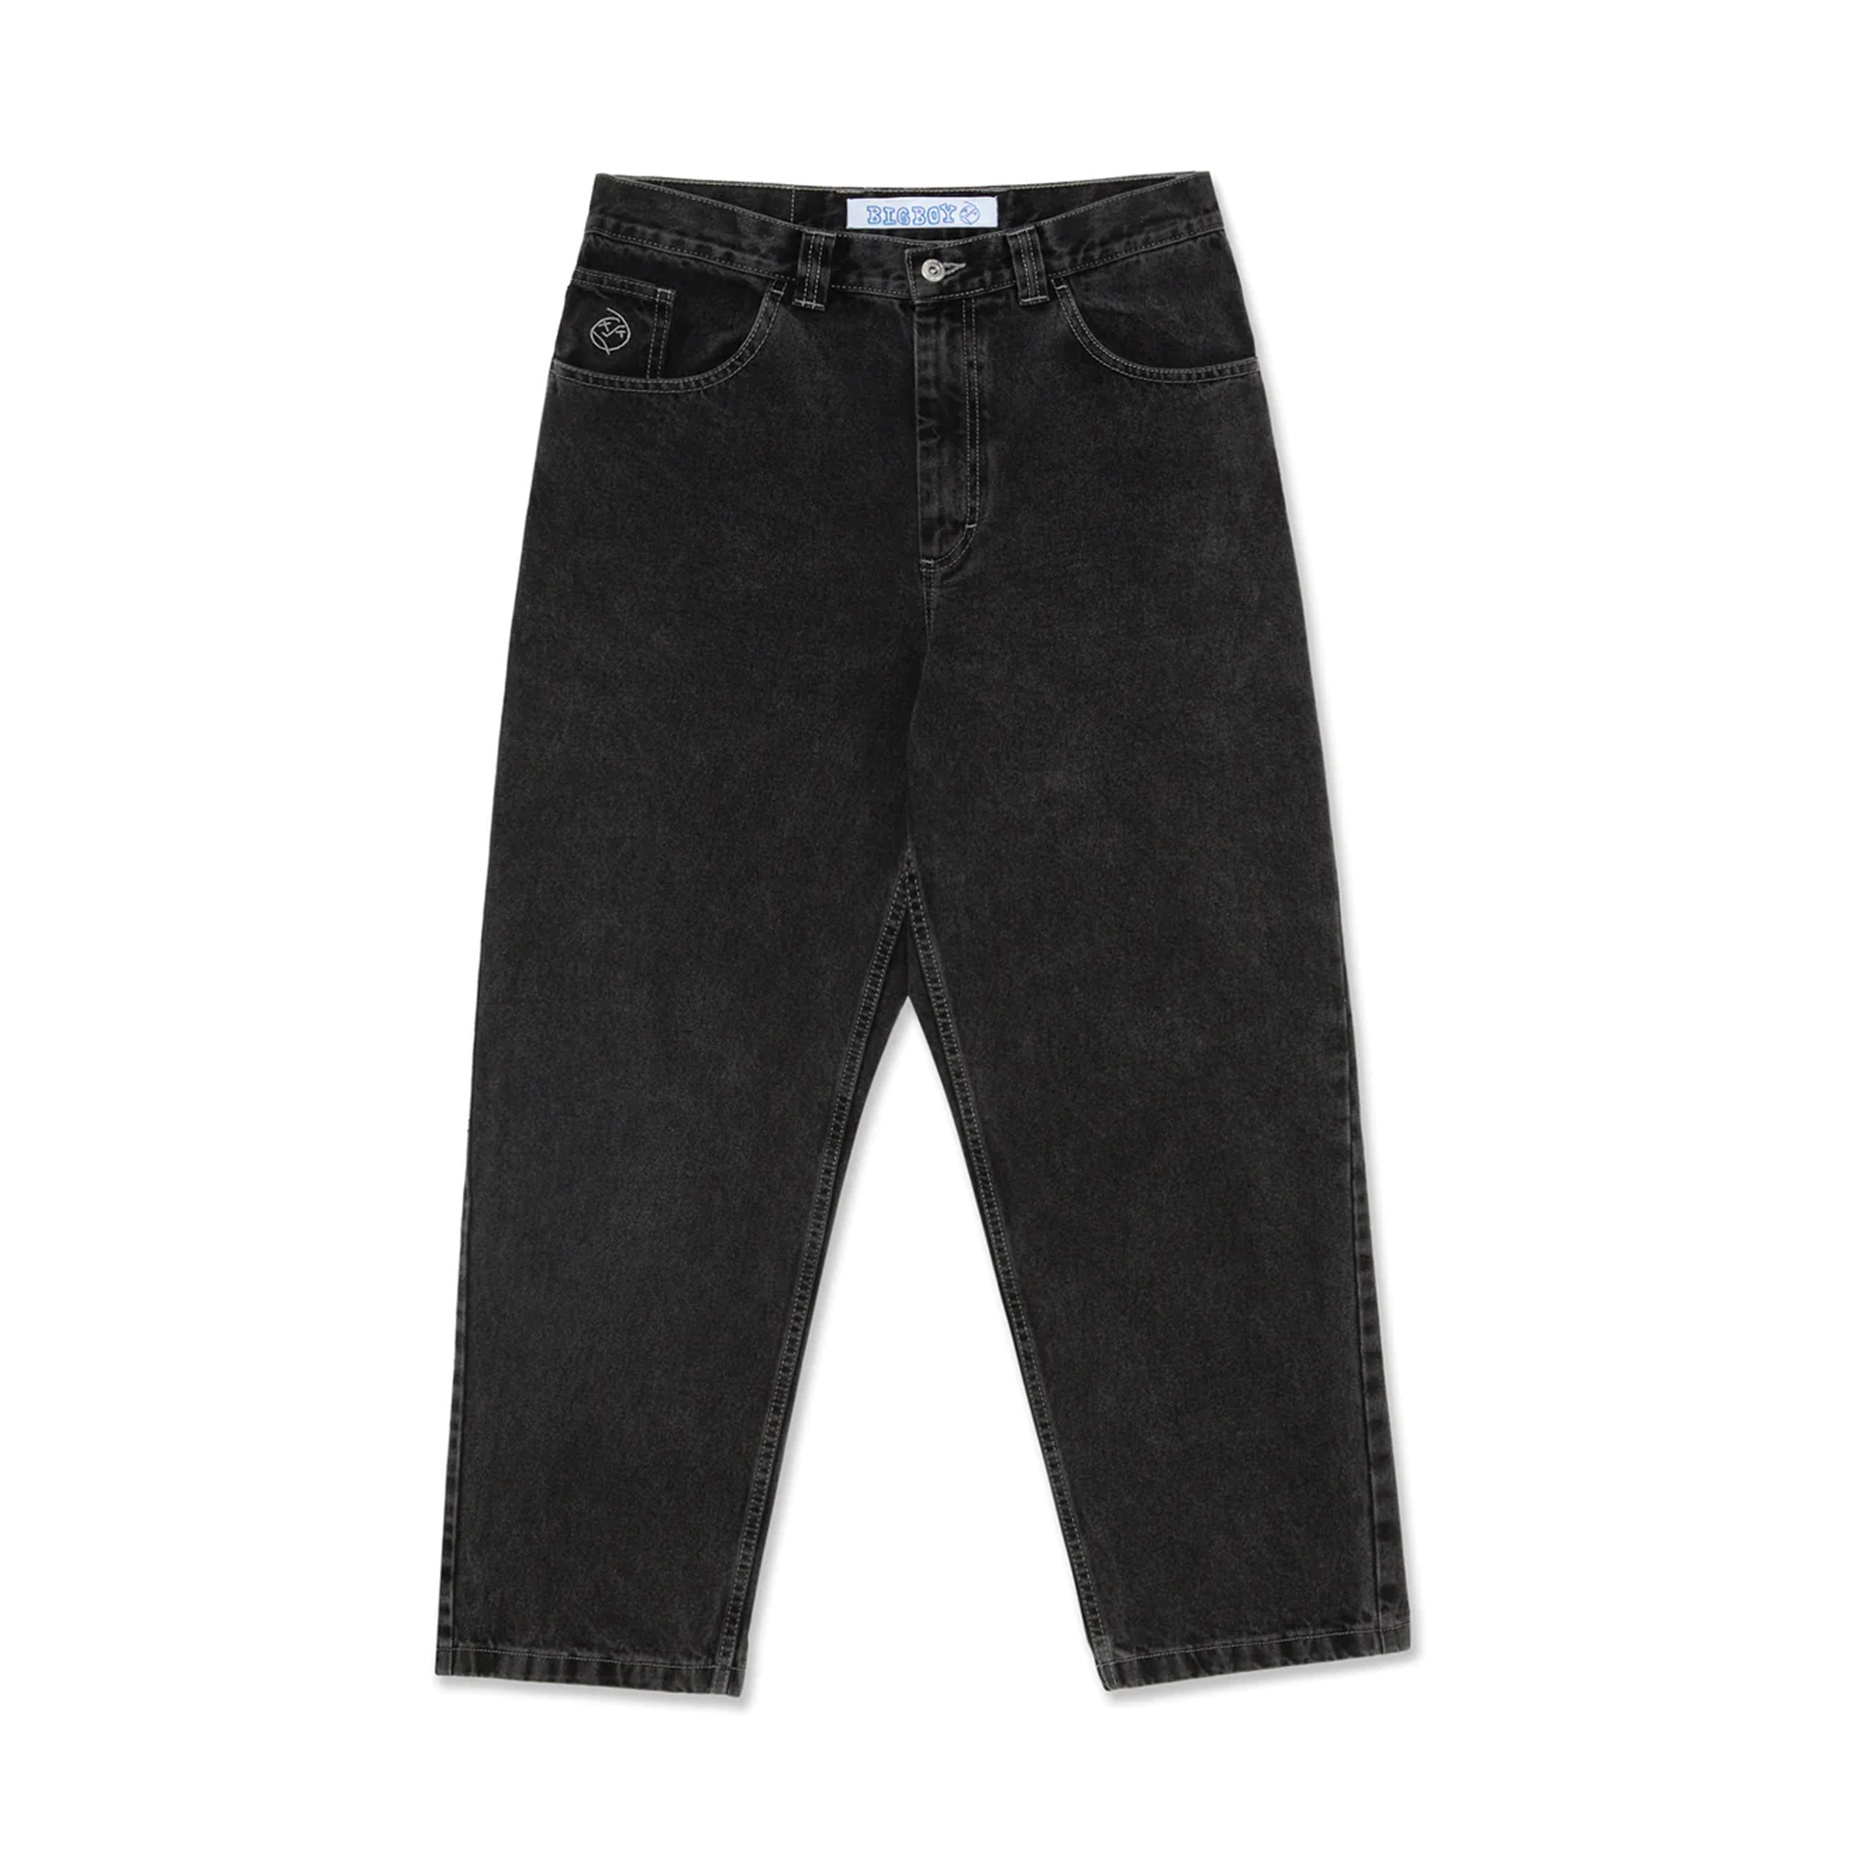 Polar Big Boy Jeans - Silver/Black | BOARDWORLD Store